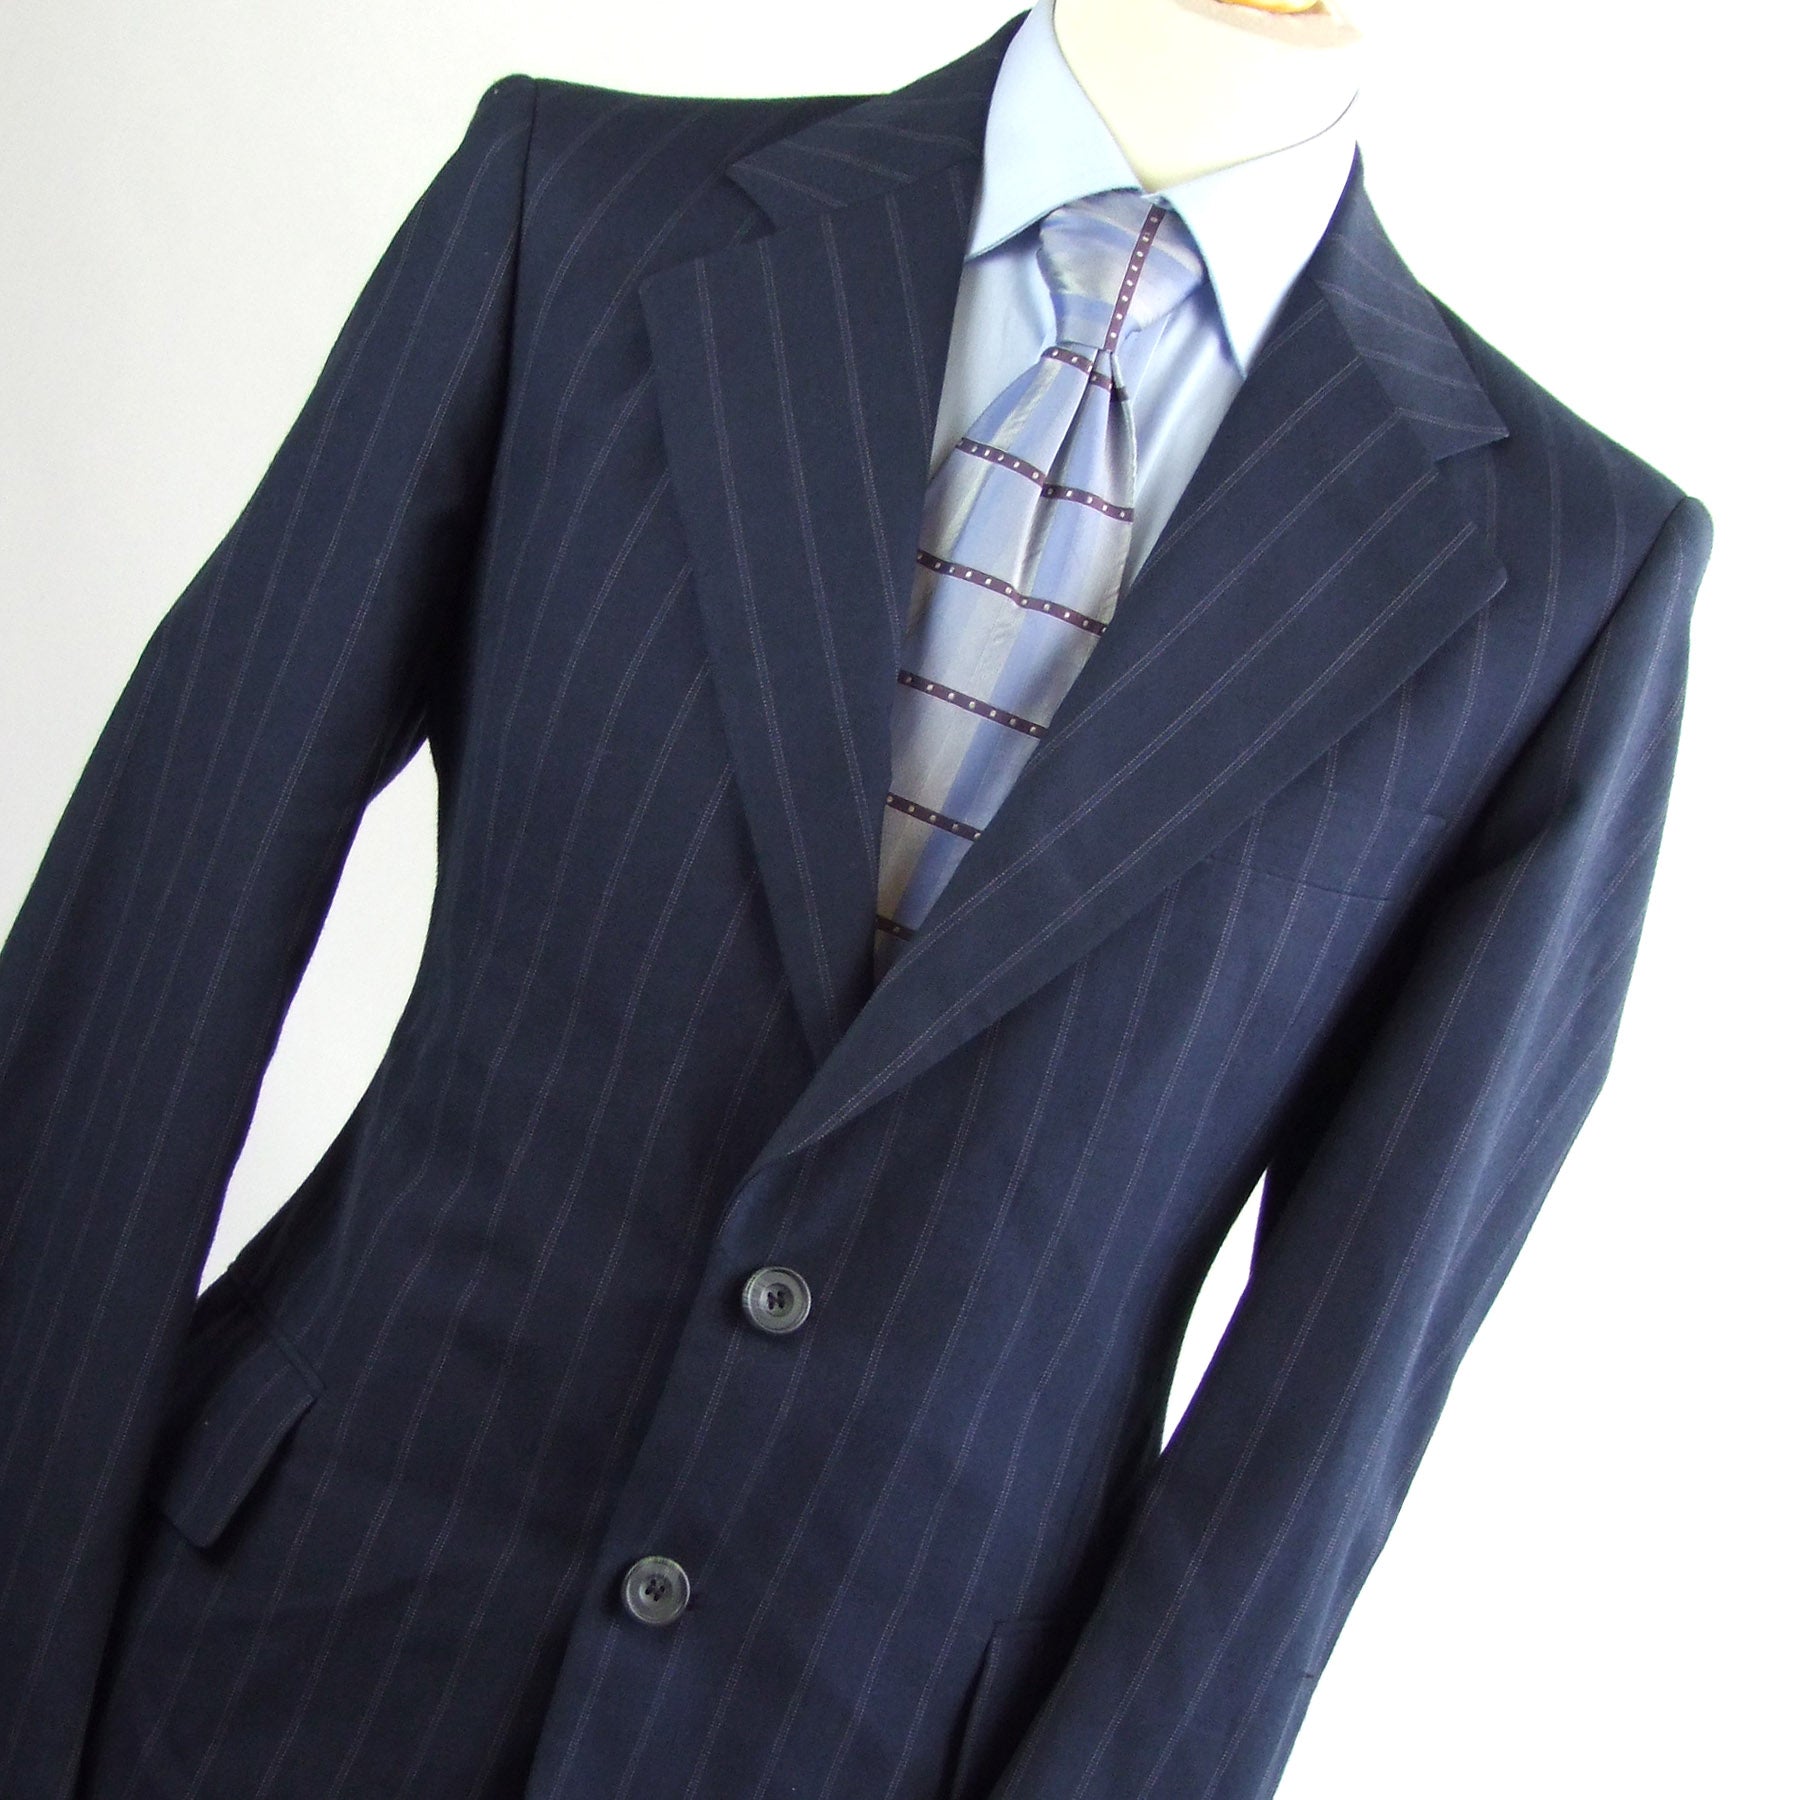 Dunn & Co Mens Blue Striped Suit Jacket 42 (Regular) Rewards - Monetha